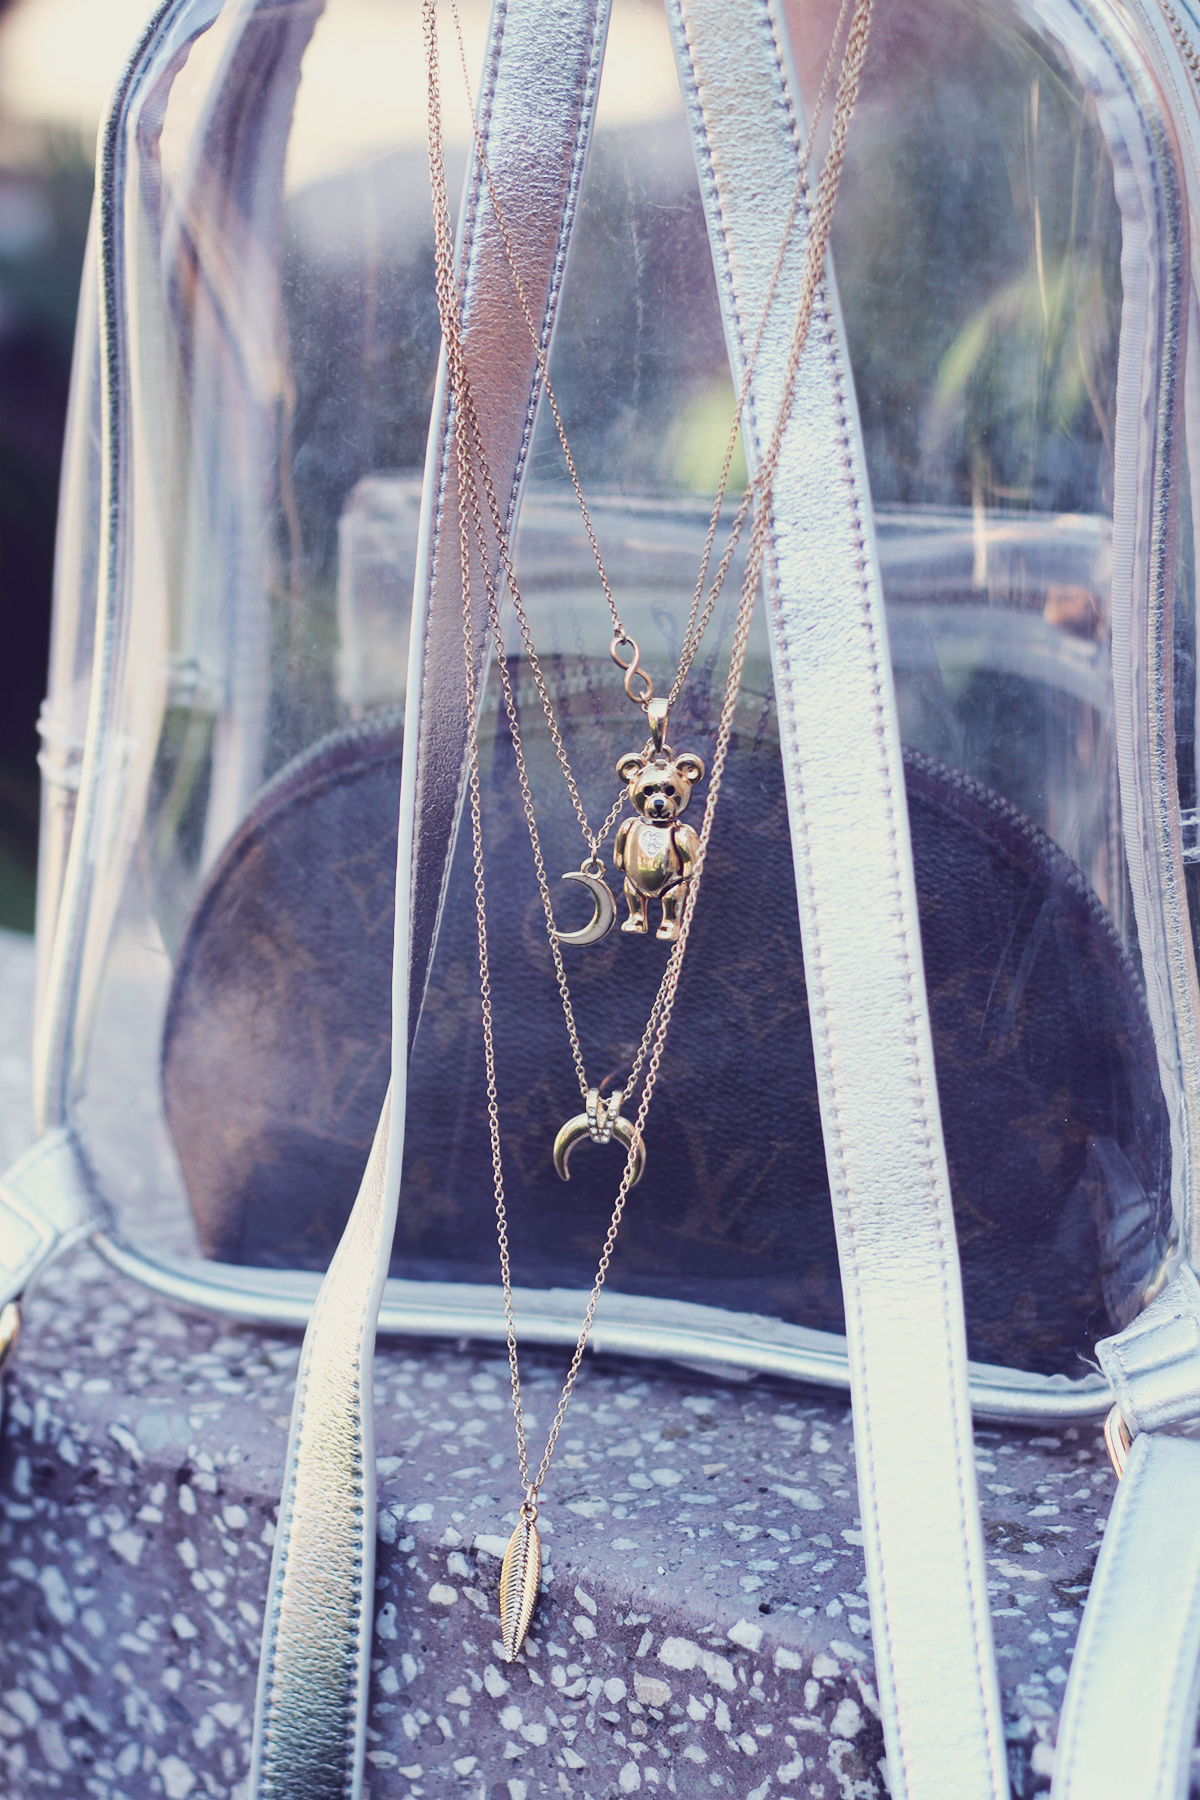 layered necklace, cute vintage bear pendant, louis vuitton make-up pouch, transparent backpack